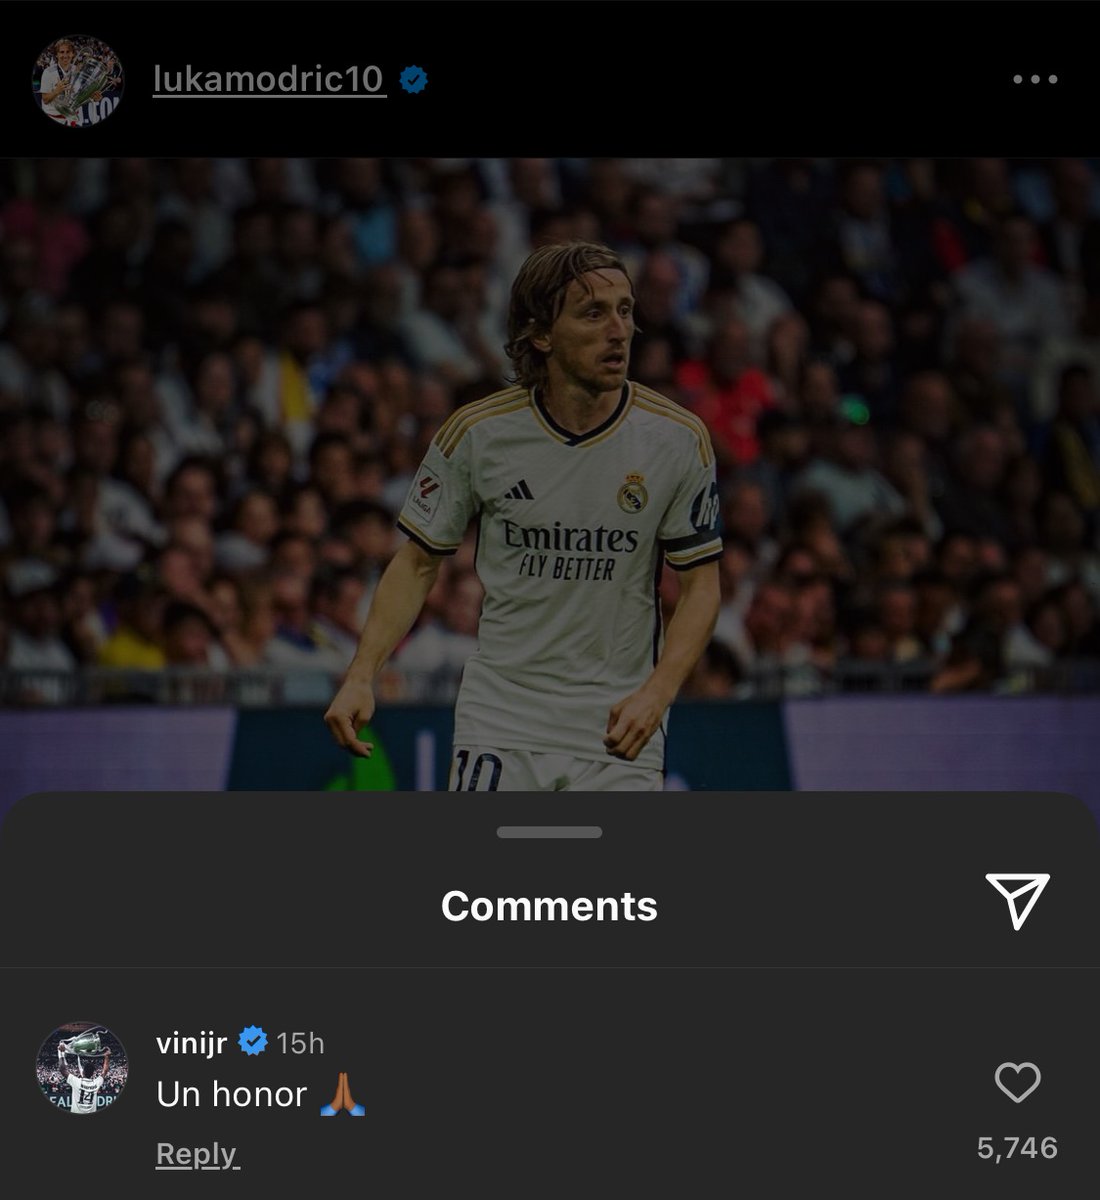 Viní Jr under Luka Modrić’s IG post: “An honor.” 🤍